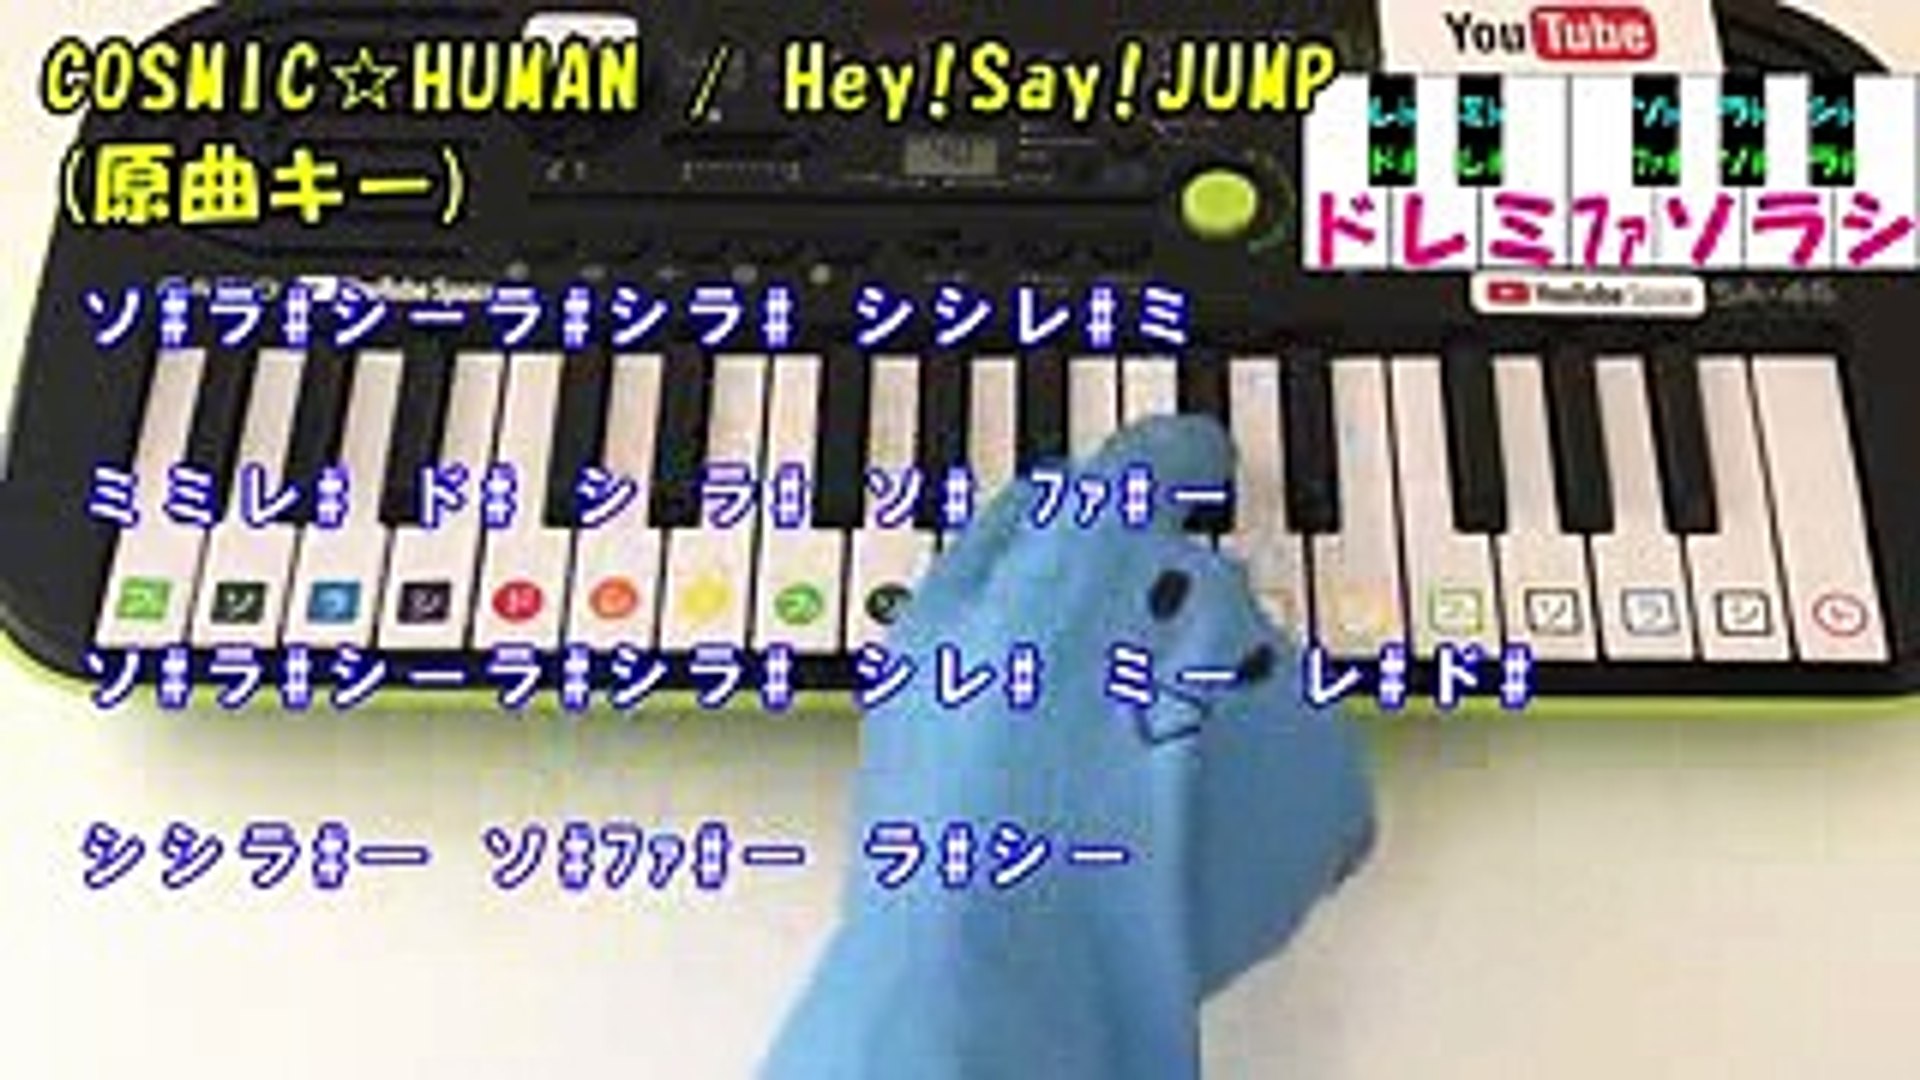 Hey Say Jump Cosmic Human トーキョーエイリアンブラザーズ 平成ジャンプ 簡単ドレミ楽譜 初心者向け1本指ピアノ Video Dailymotion